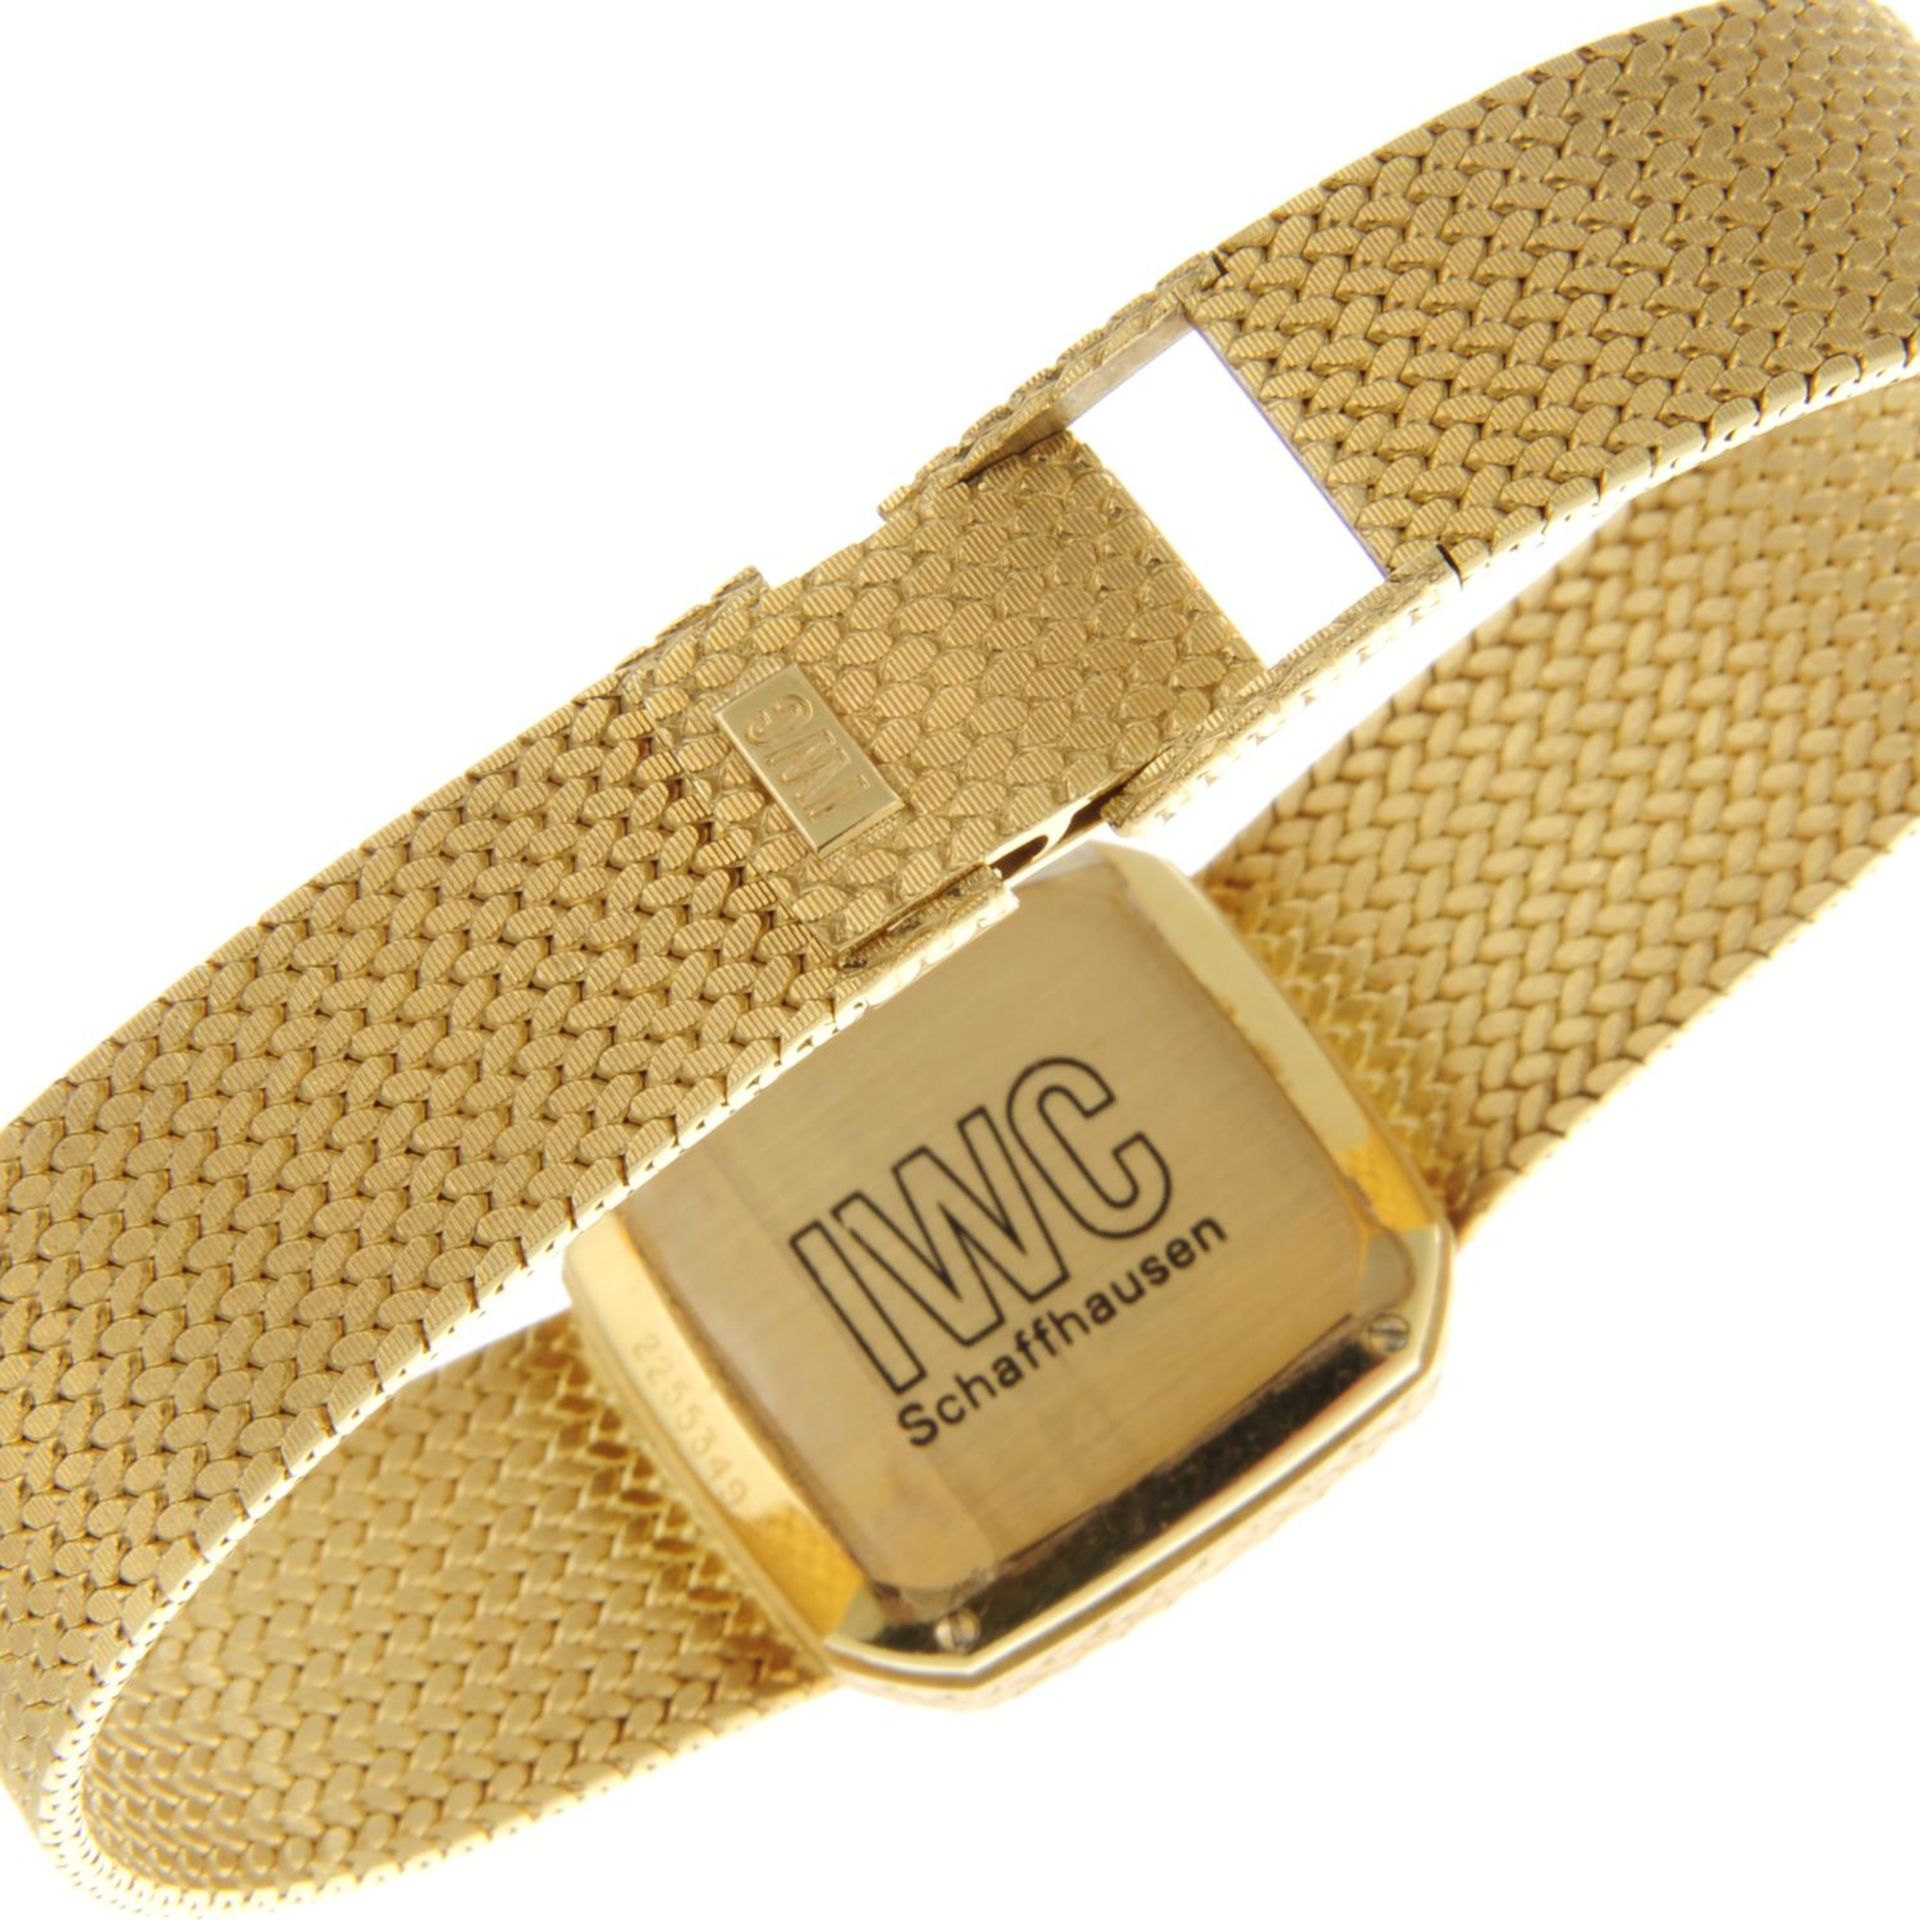 IWC - a bracelet watch. - Image 2 of 5